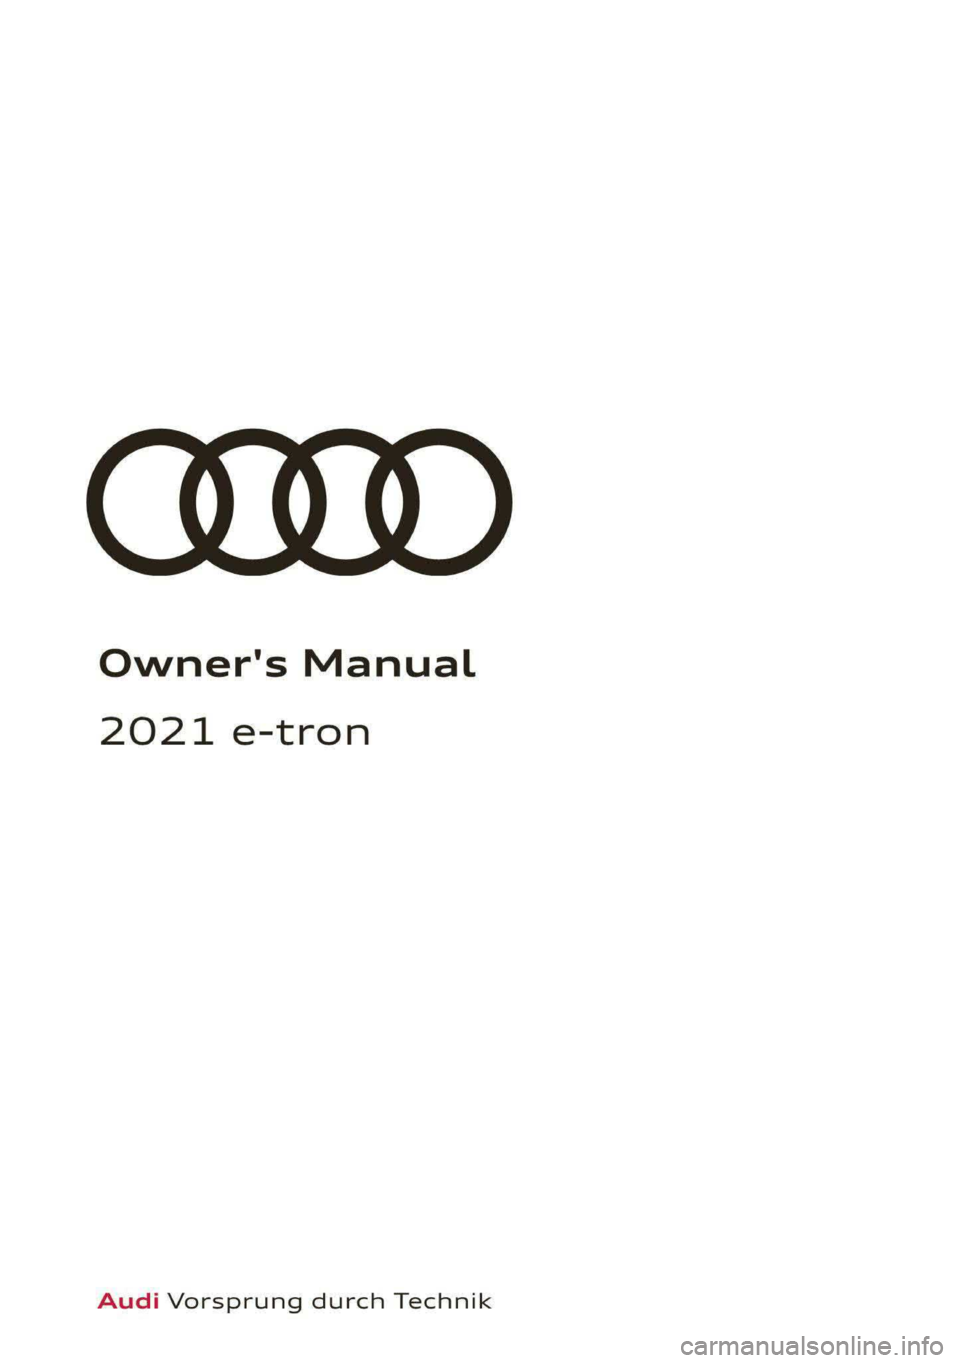 AUDI E-TRON 2021  Owners Manual Owner's Manual 
2021 e-tron 
Audi Vorsprung durch Technik  